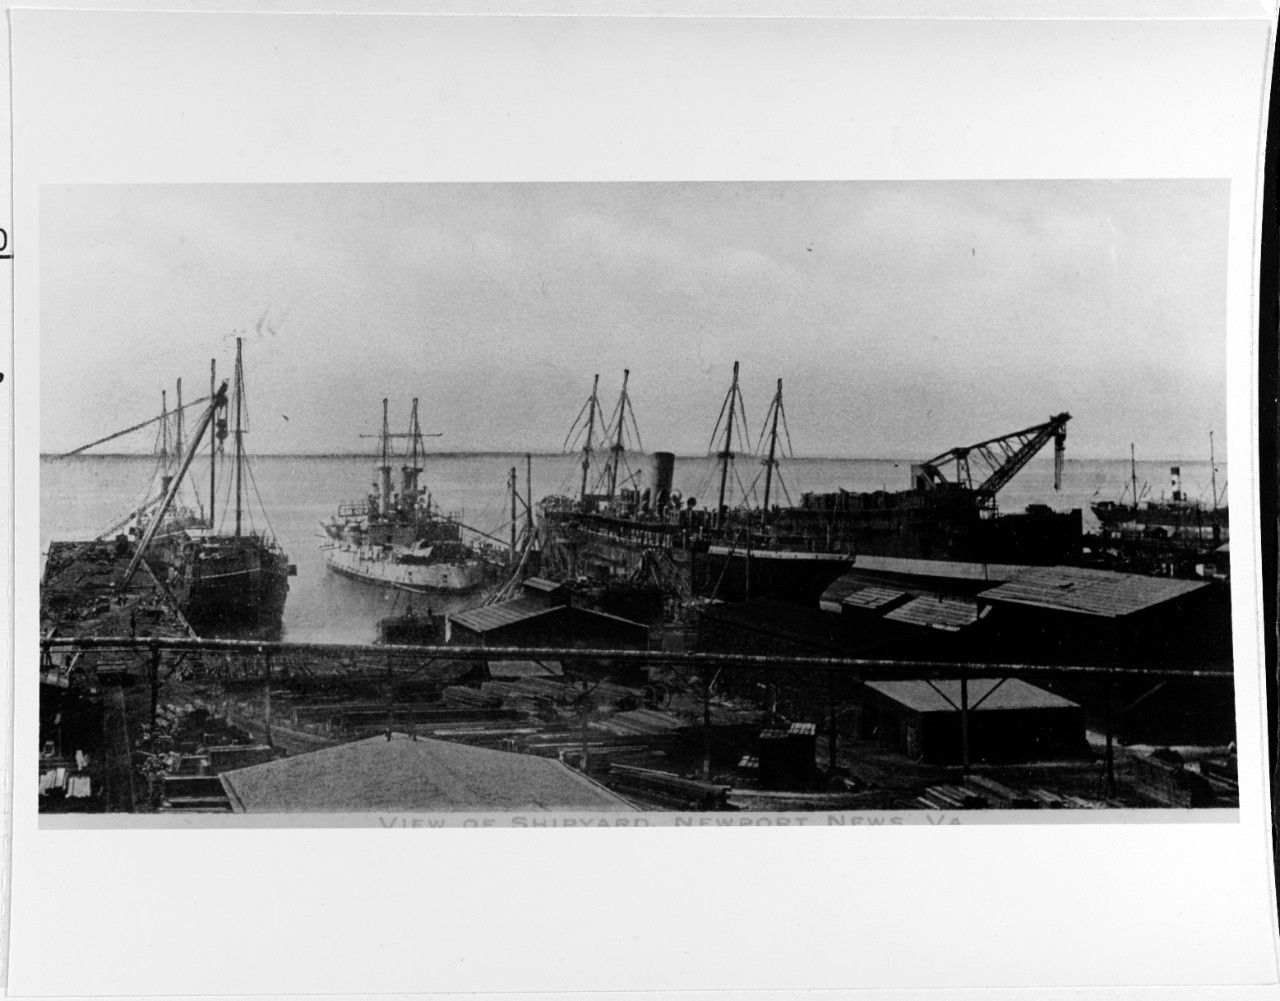 Newport News Shipbuilding and Drydock Co., Newport News, Virginia